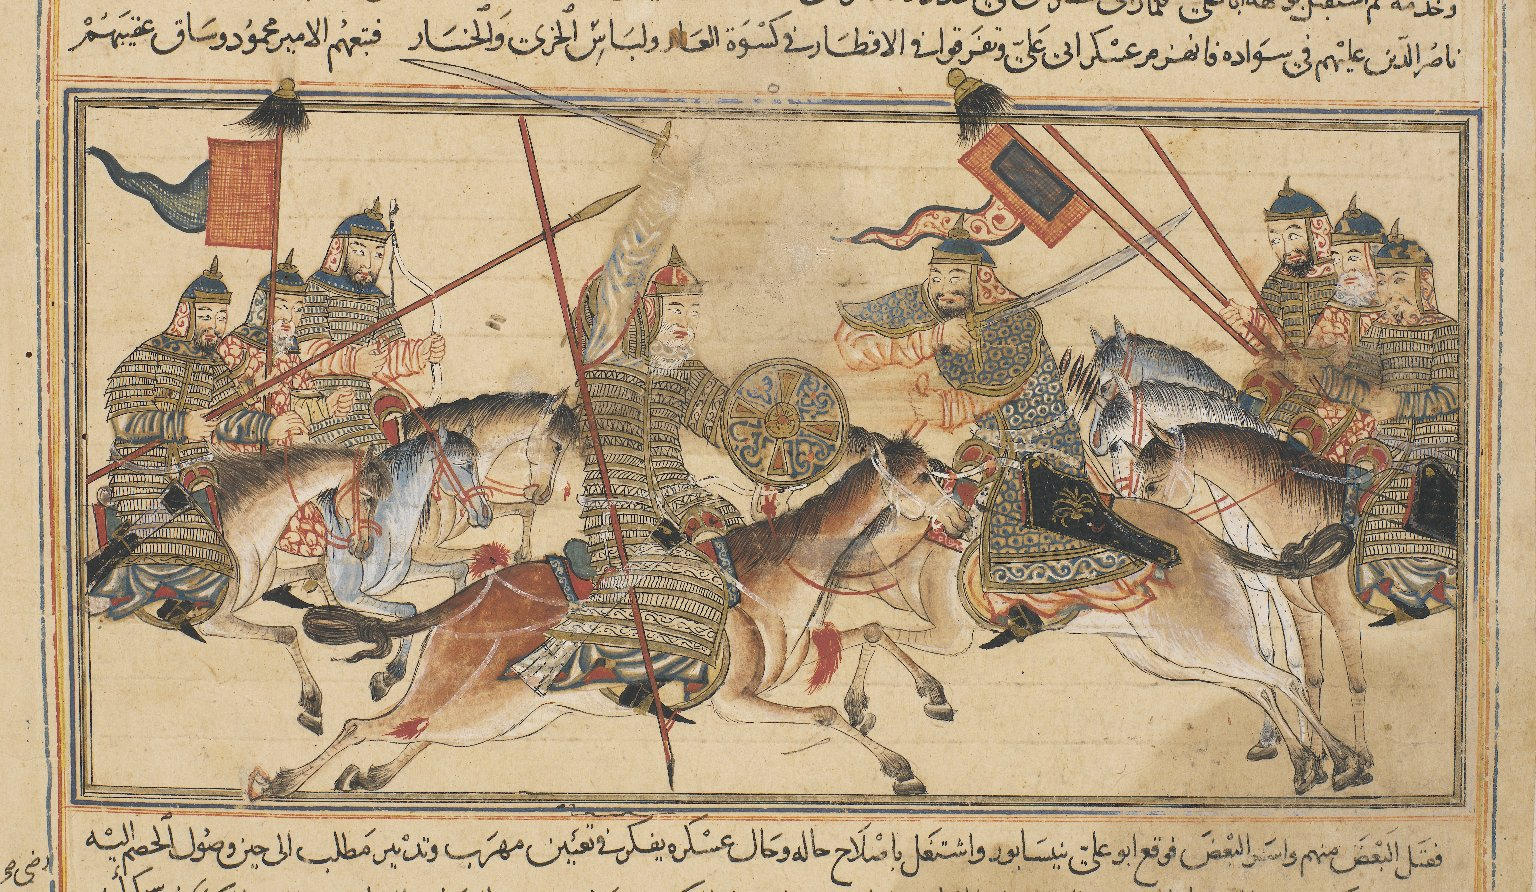 Fight between Mahmud of Ghazni and Abu 'Ali Simjuri.